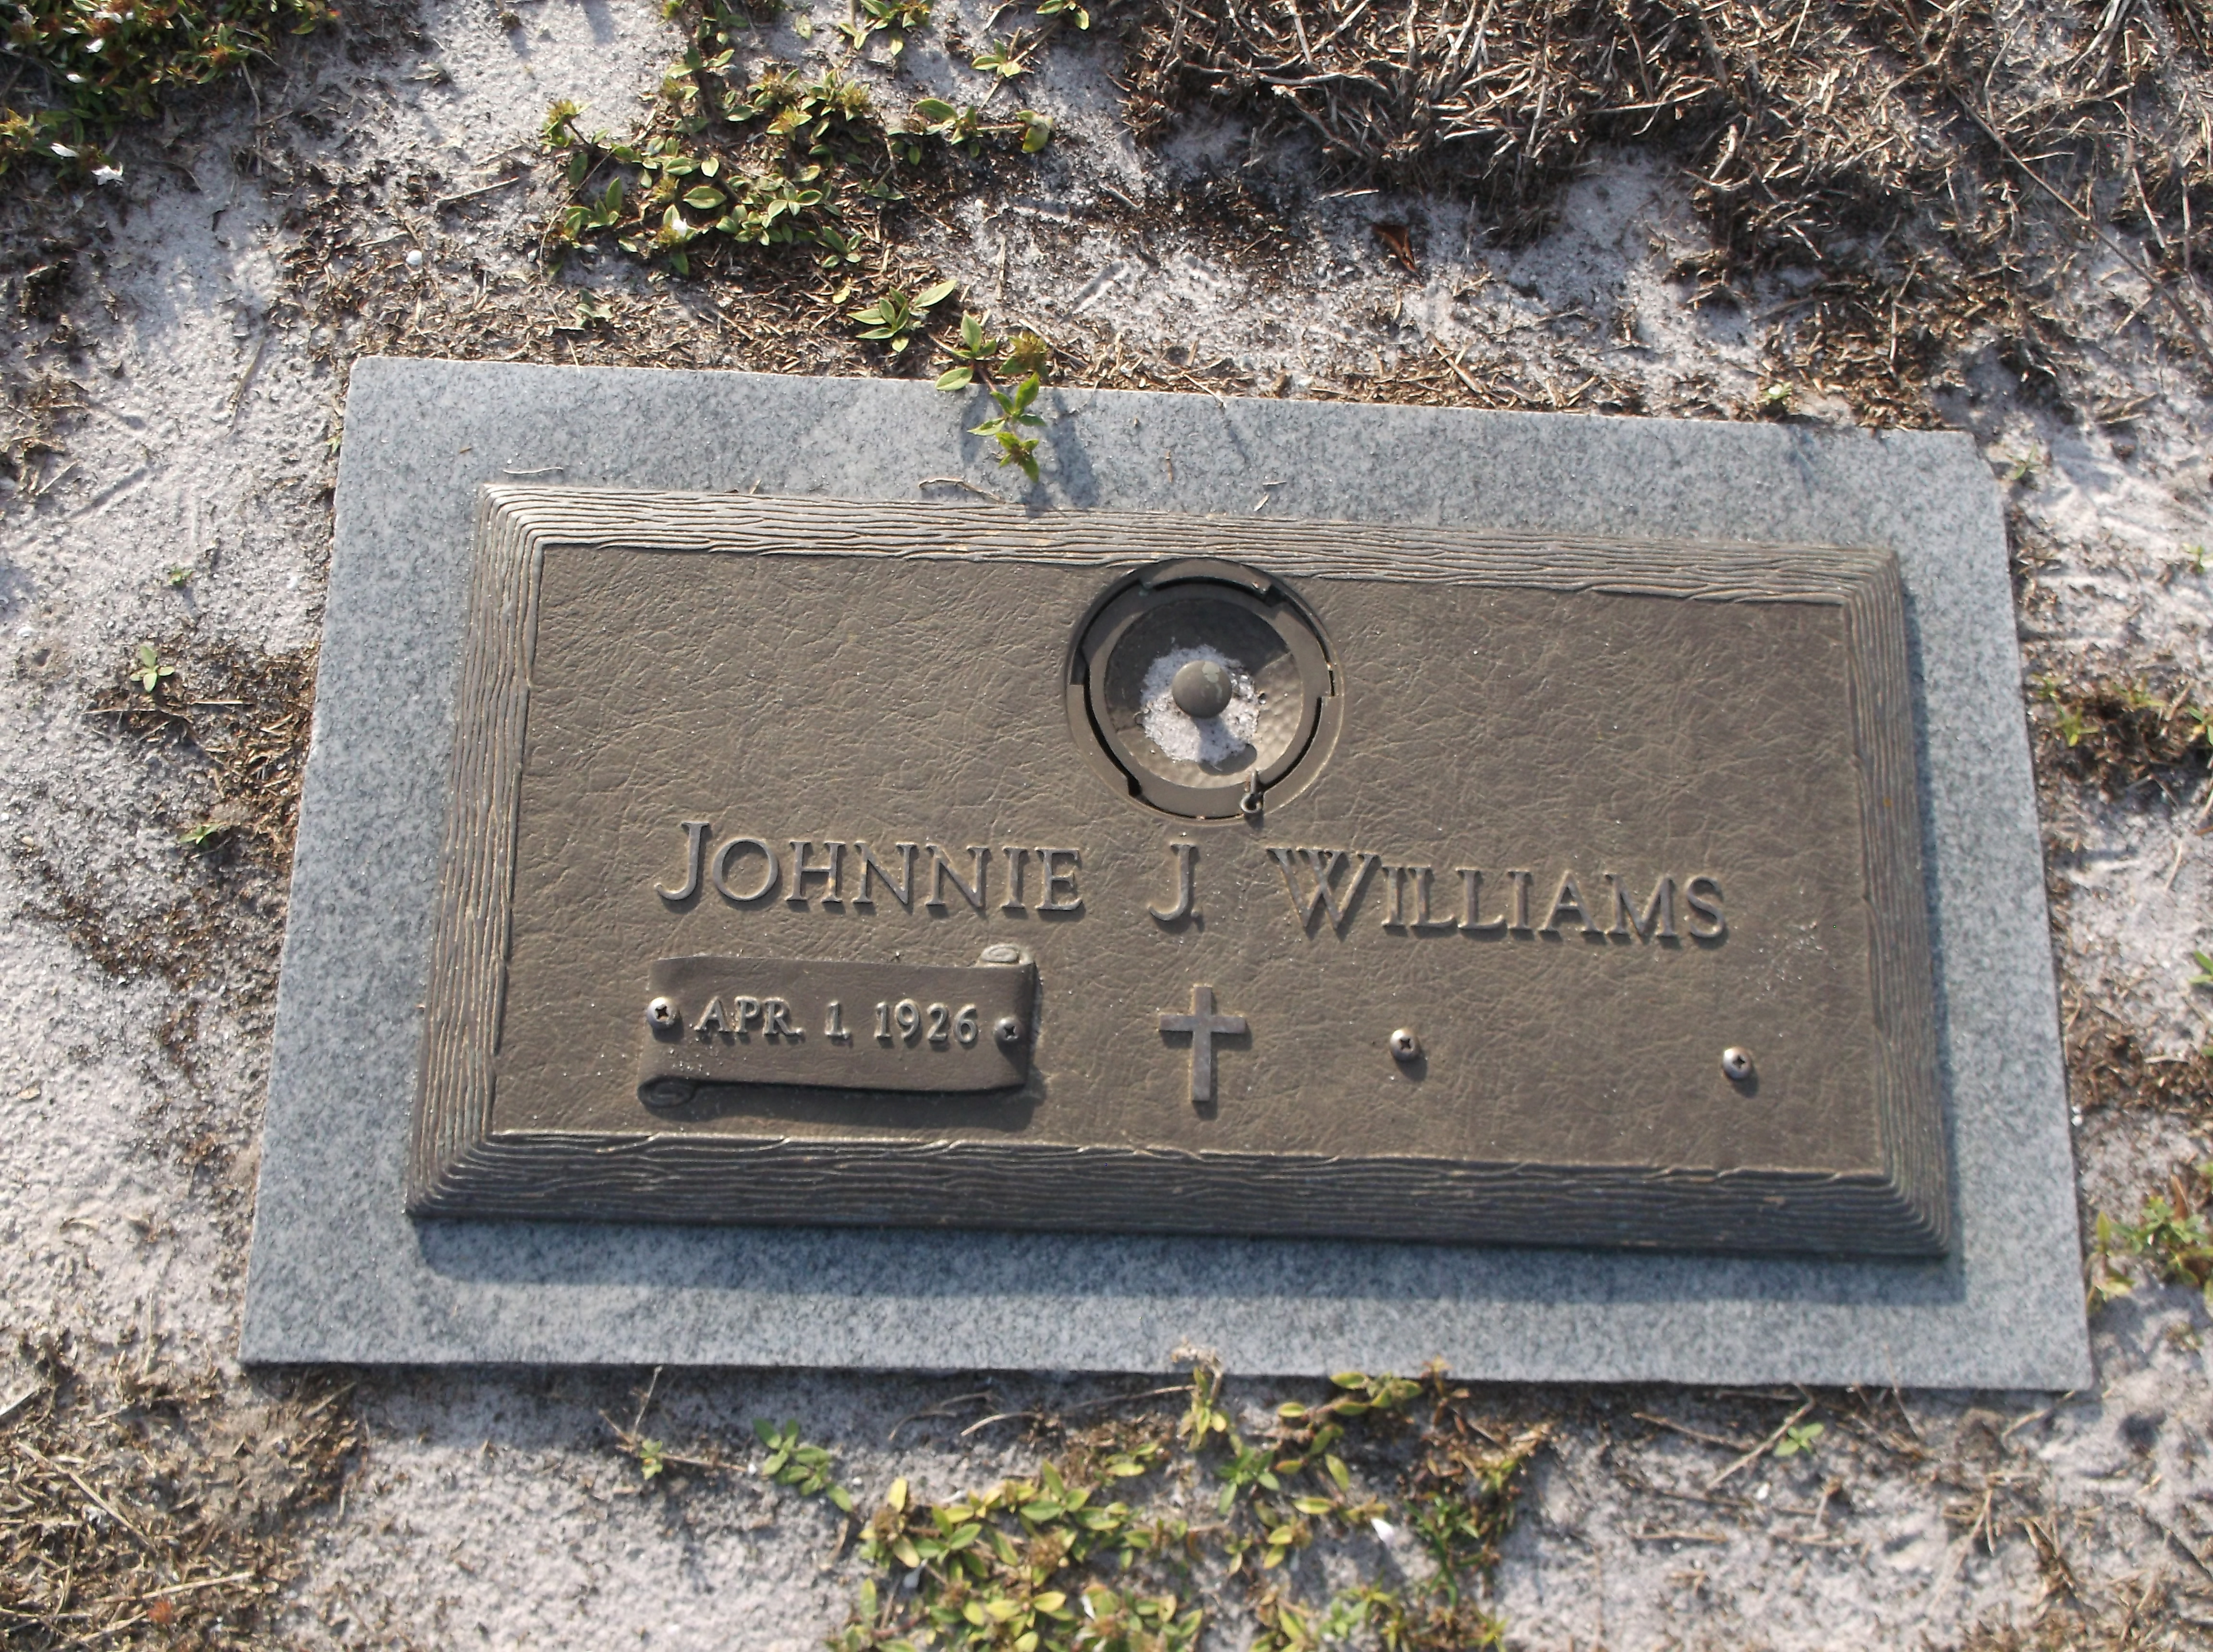 Johnnie J Williams